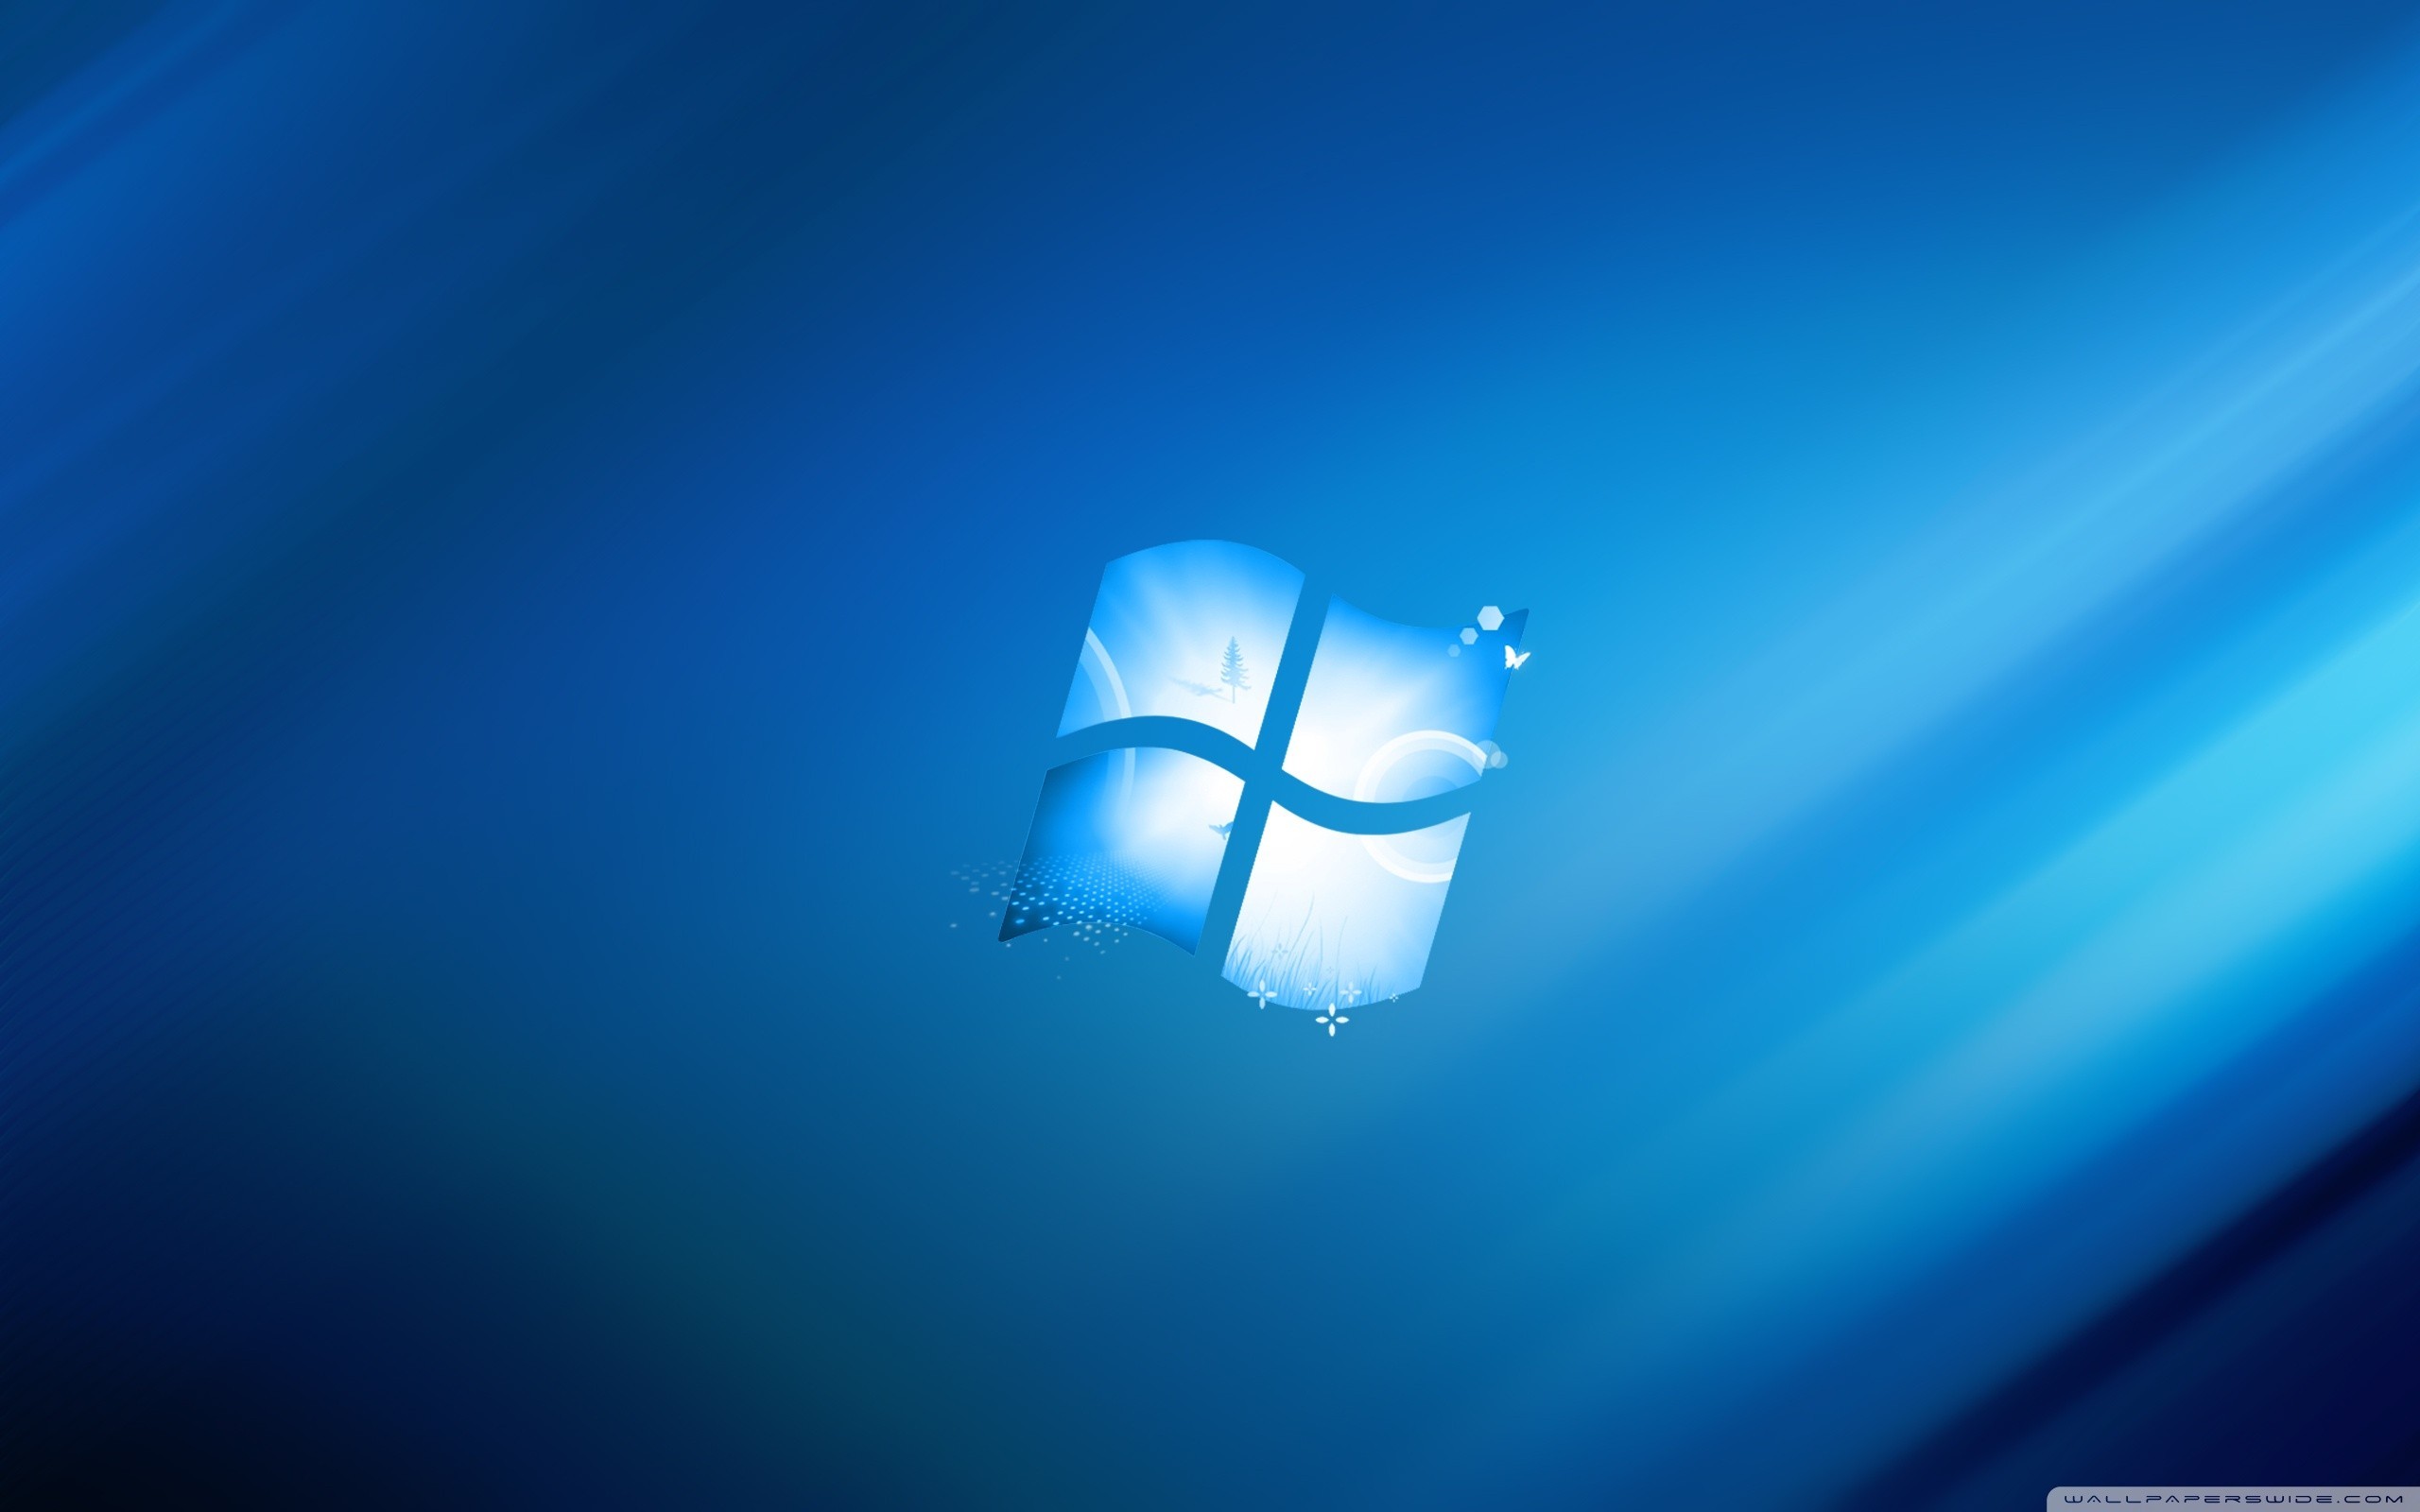 windows desktop wallpaper hd,blau,betriebssystem,himmel,licht,atmosphäre